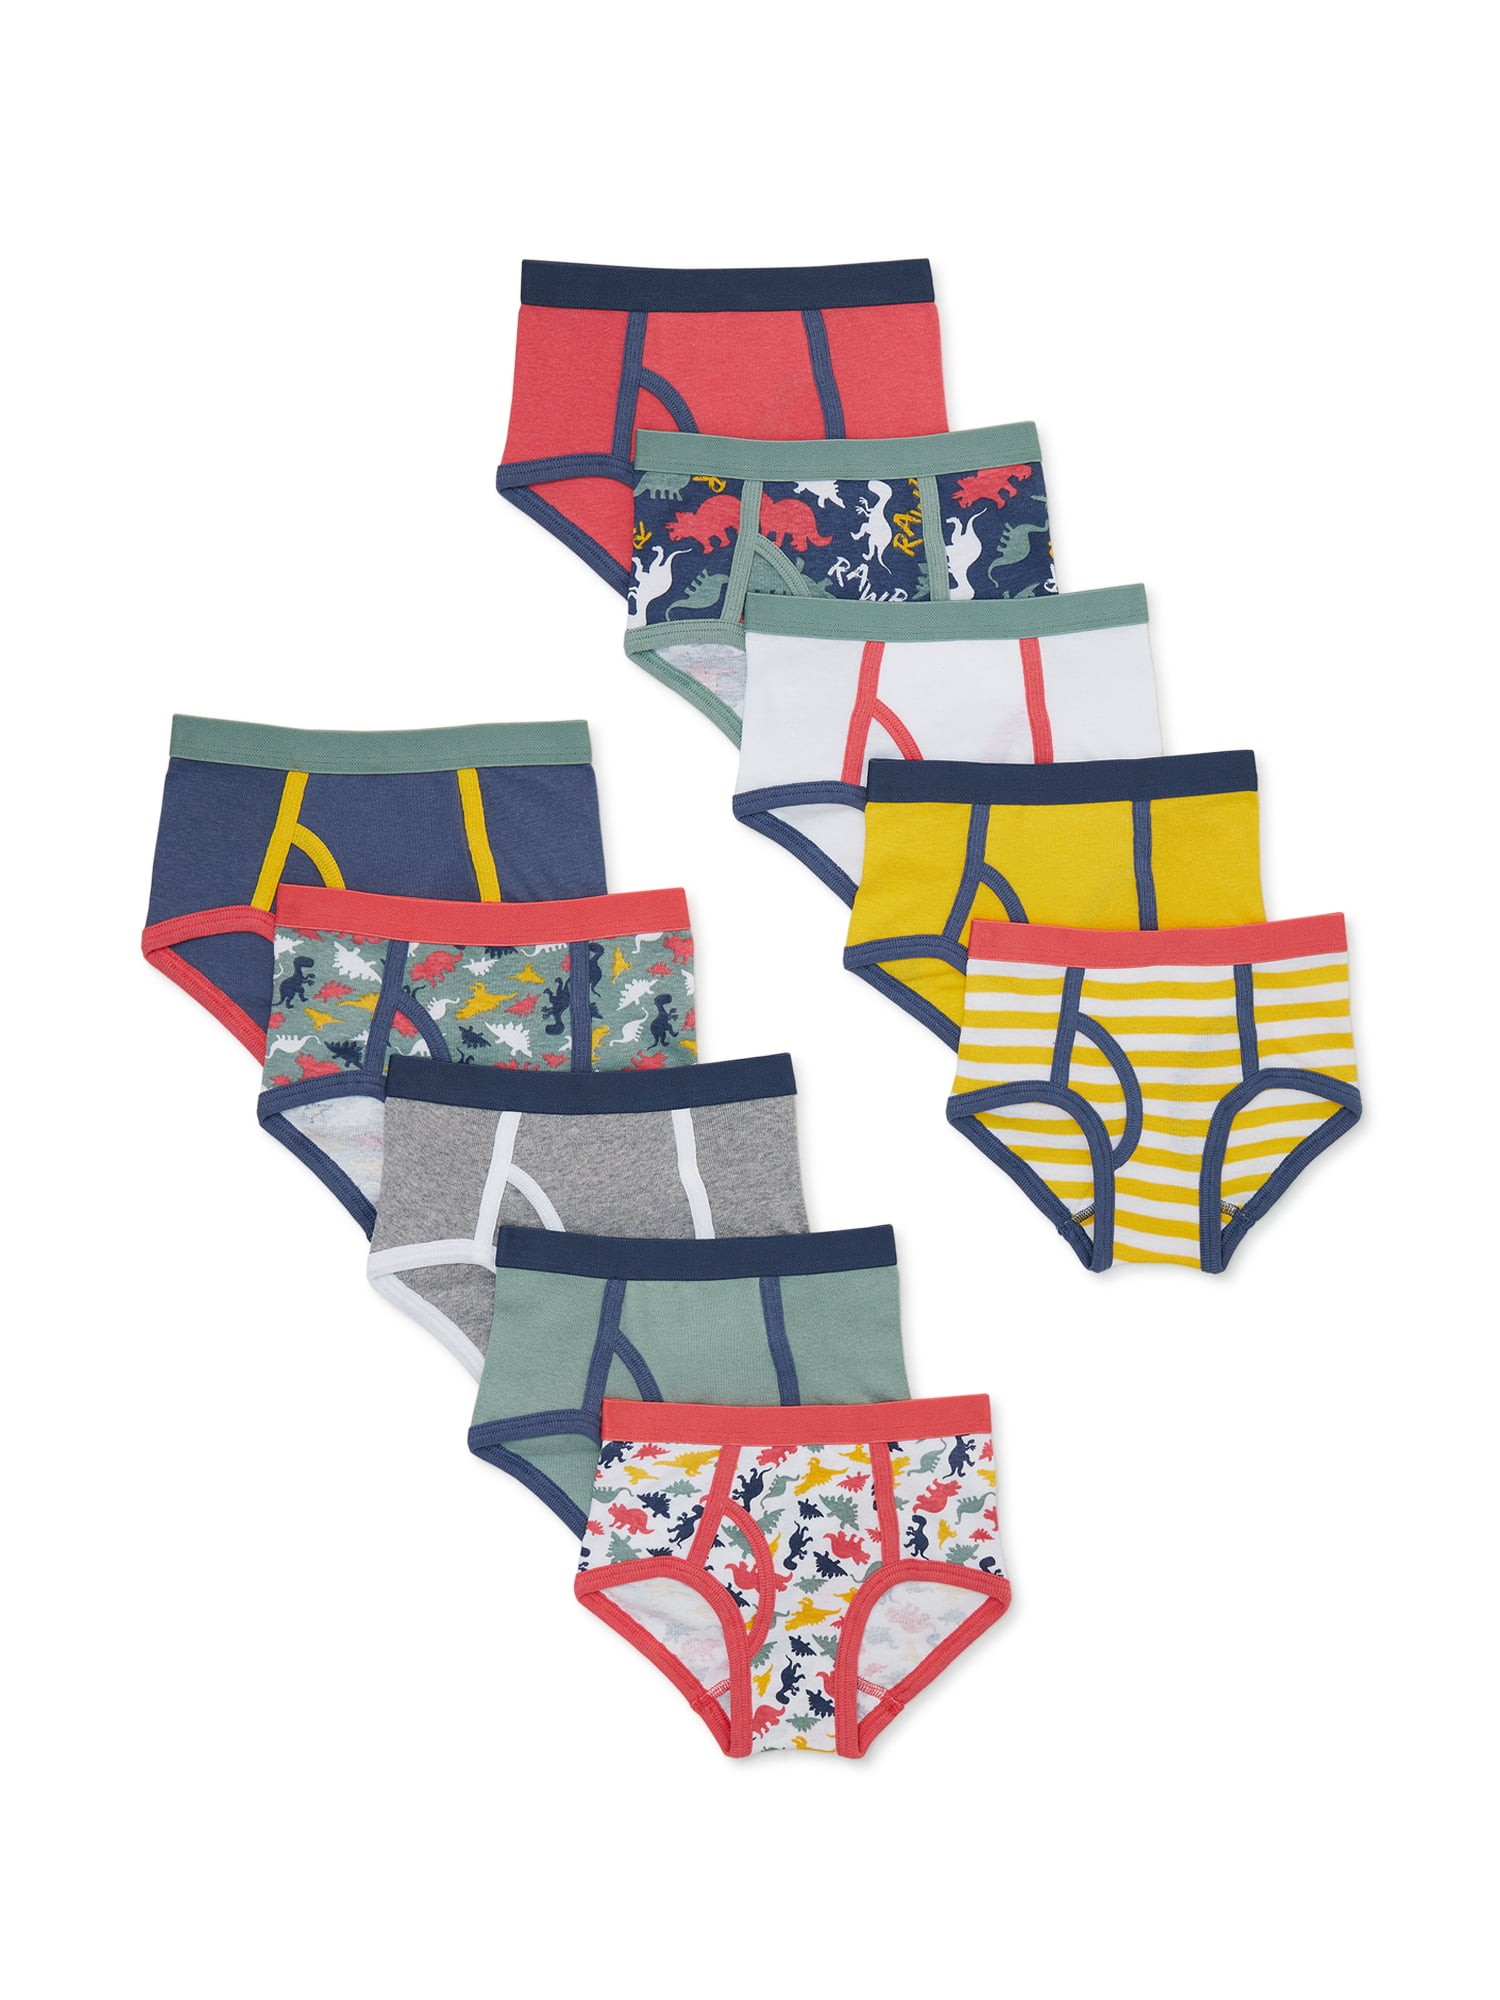 Paw Patrol Toddler Boys' Underwear, 6 Pack Sizes 2T-4T 